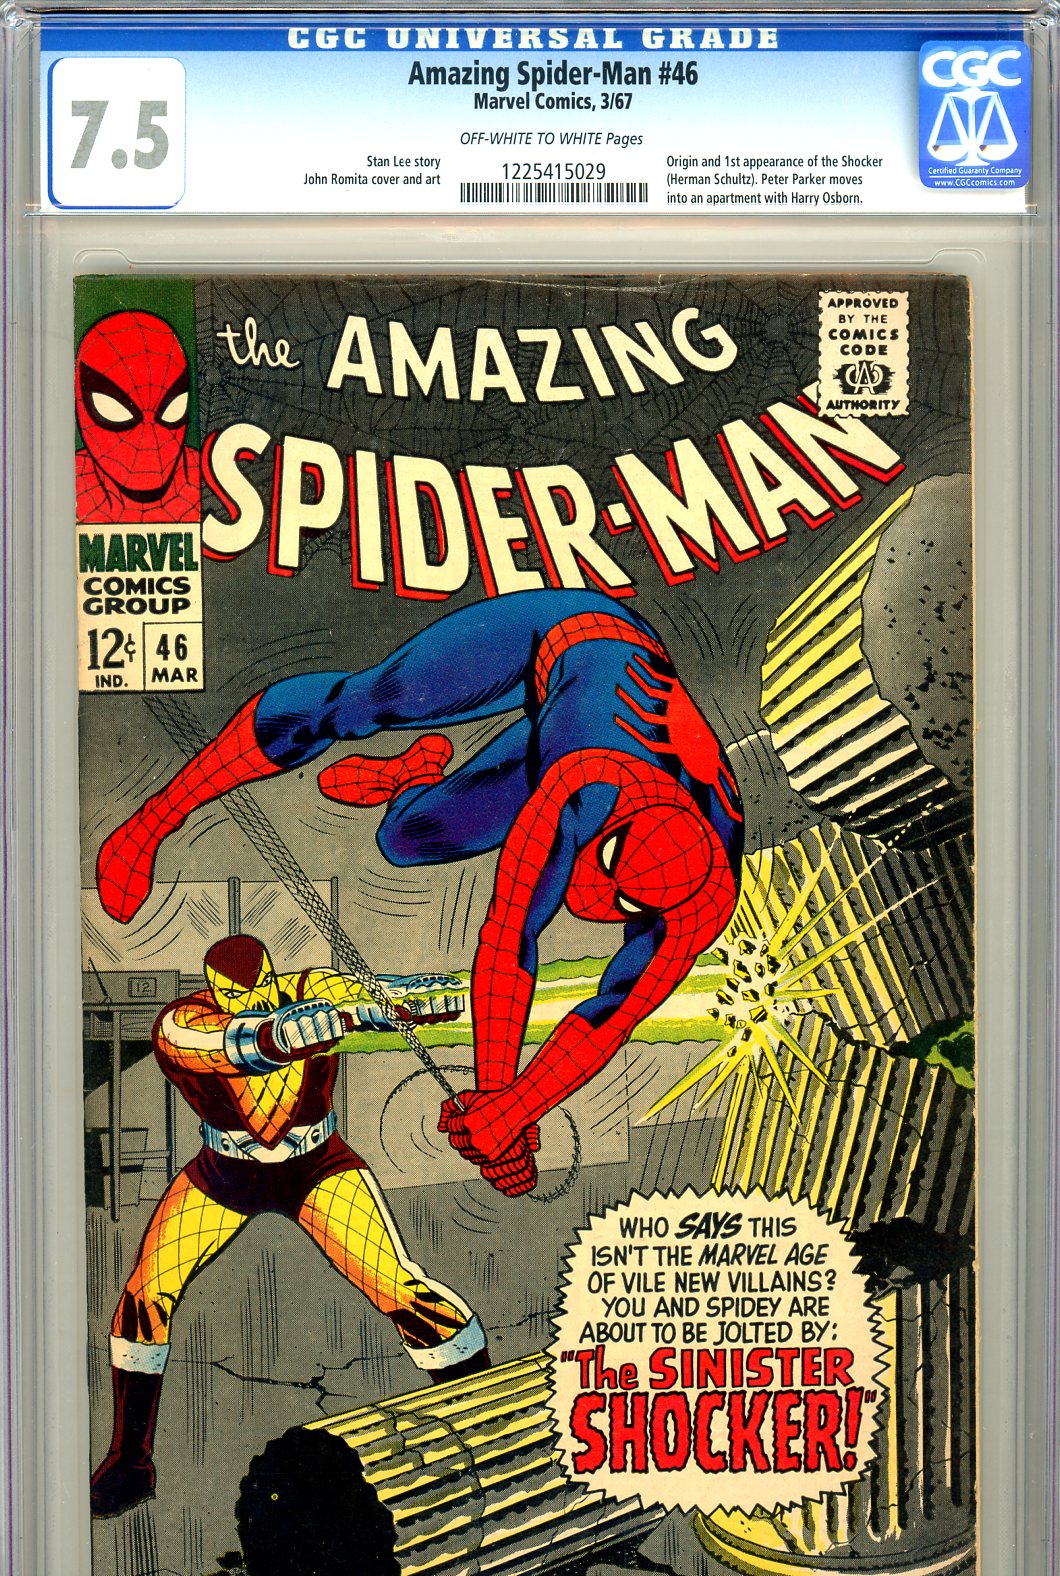 Amazing Spider-Man #46 CGC 7.5 ow/w